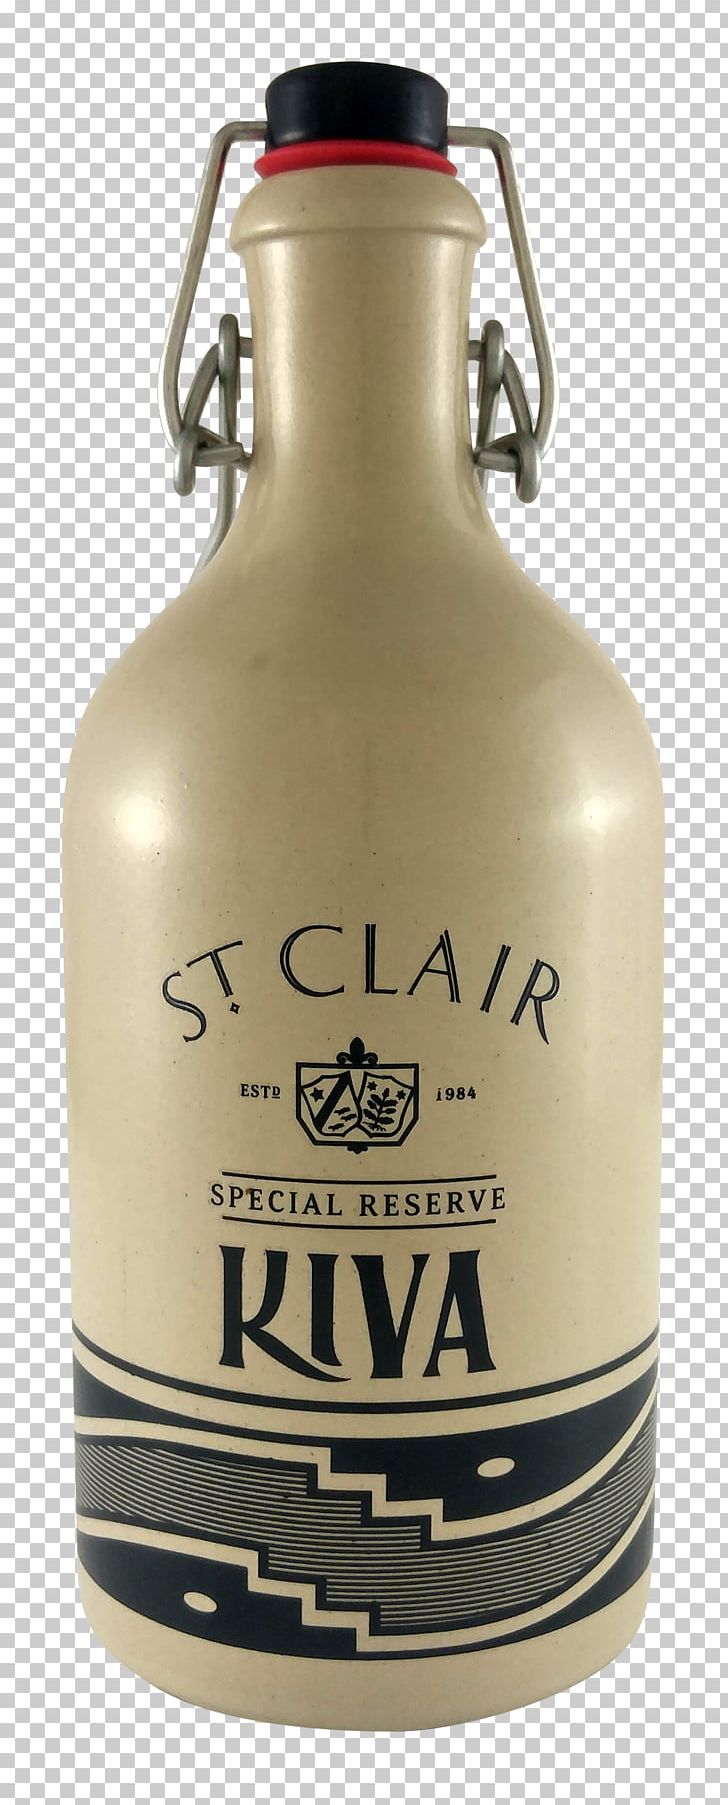 St. Clair Winery & Tasting Room Beer Bottle PNG, Clipart, Alcoholic Beverages, Beer, Beer Bottle, Bottle, Clair Free PNG Download